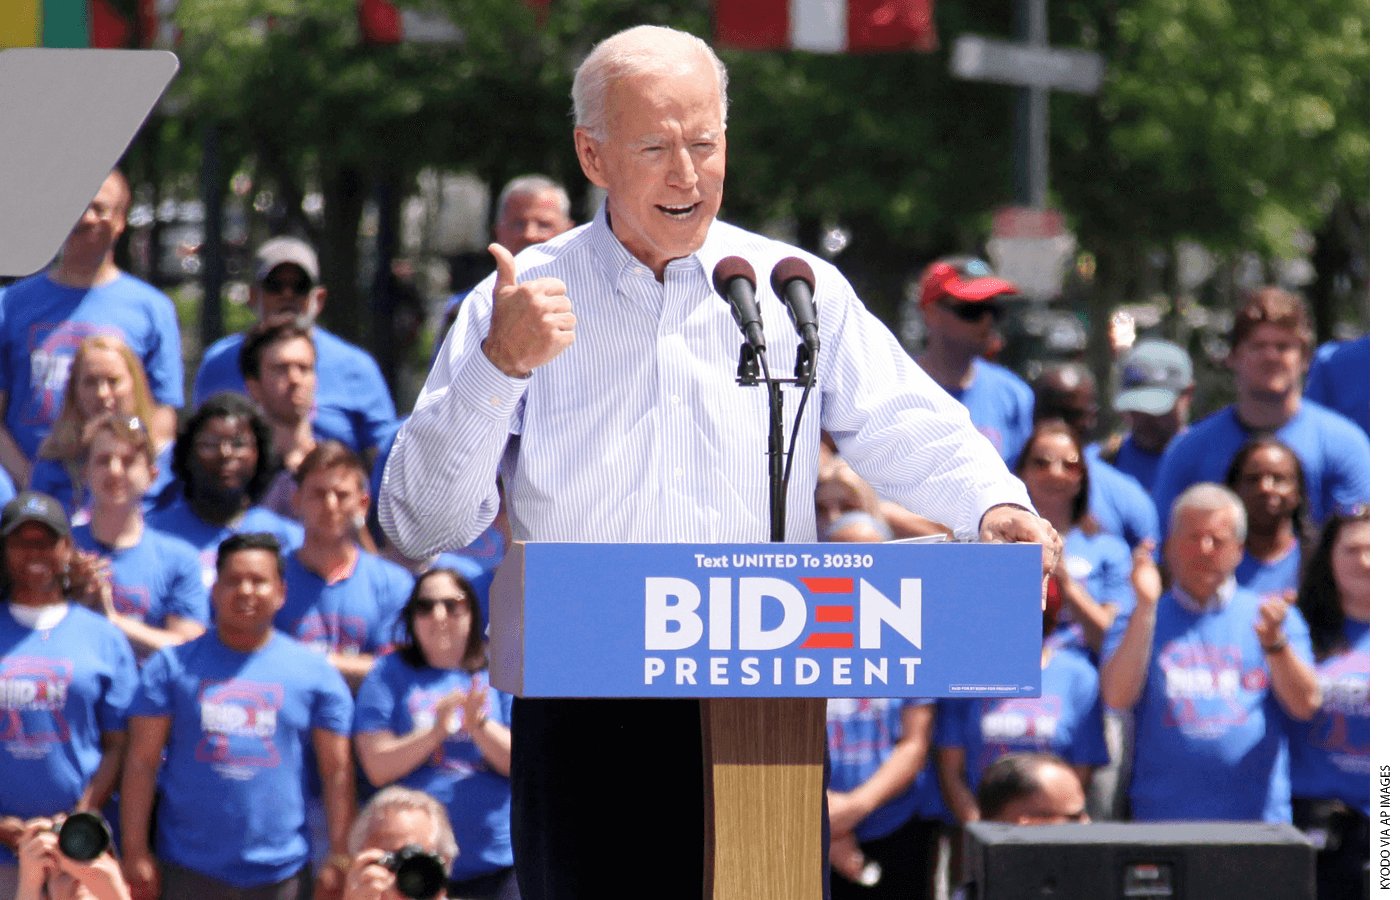 Joe Biden at a podium during a campaign rally.